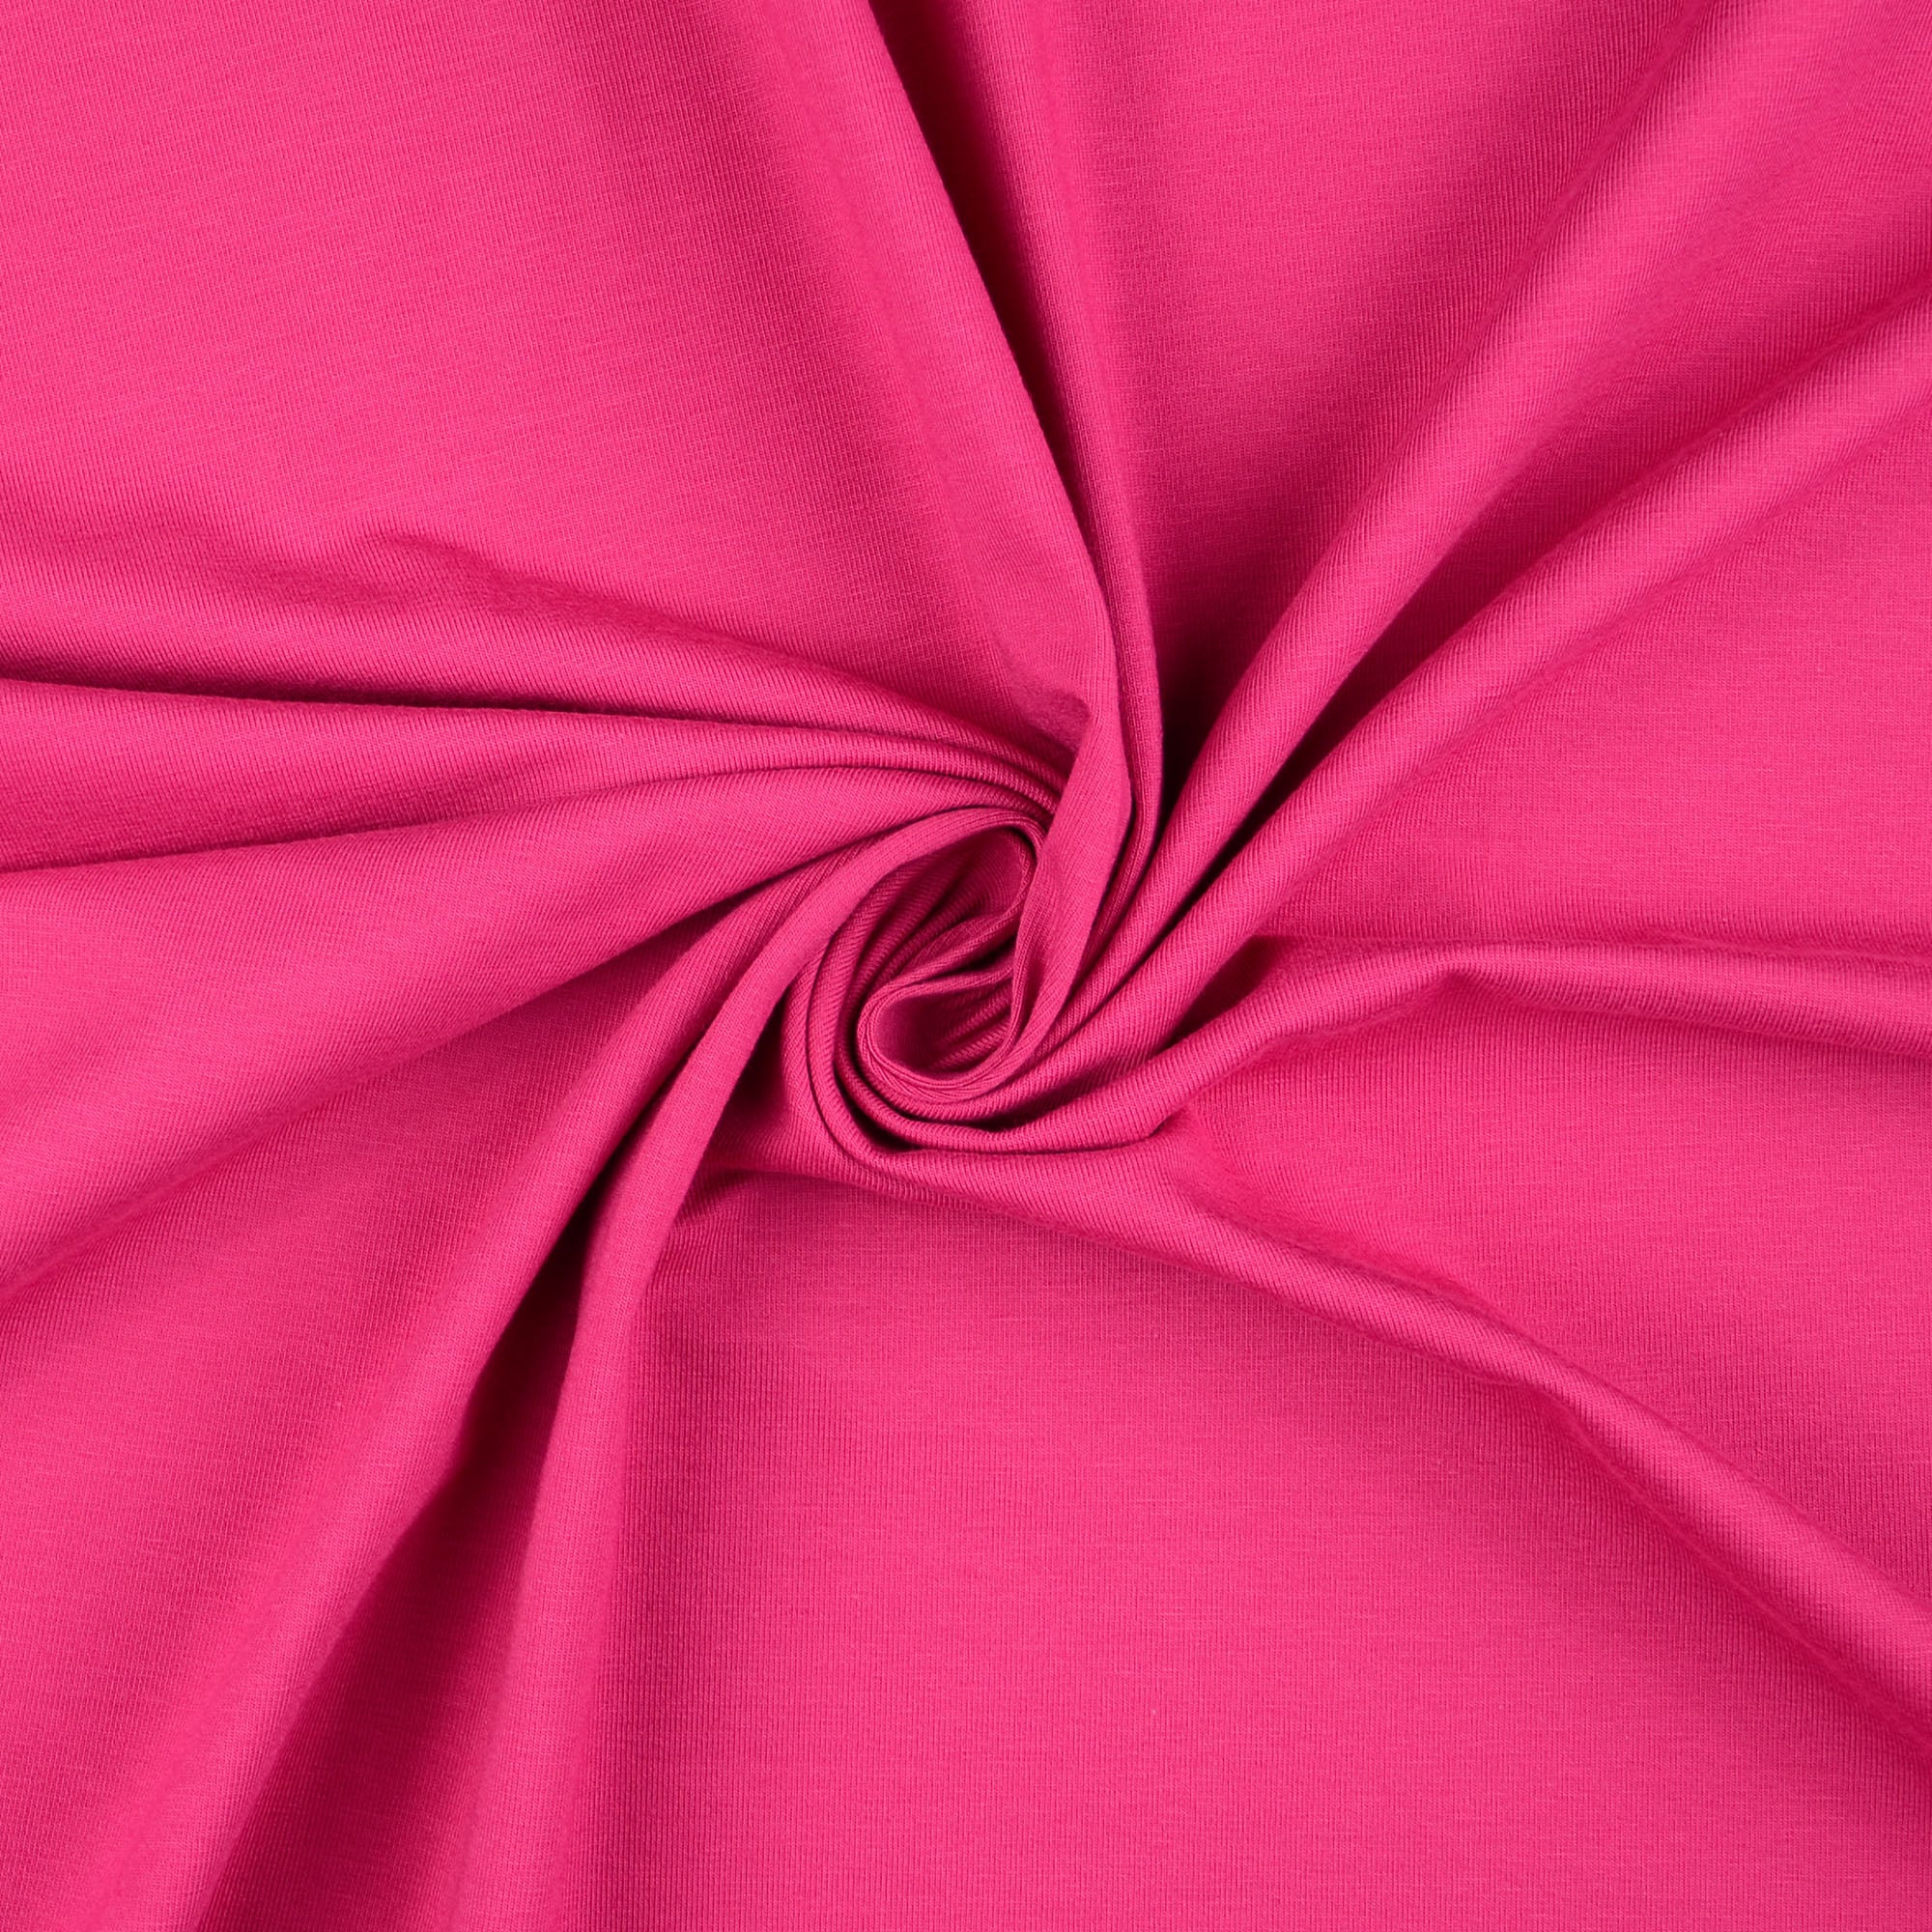 Essential Chic Fuchsia Pink  Plain Cotton Jersey Fabric